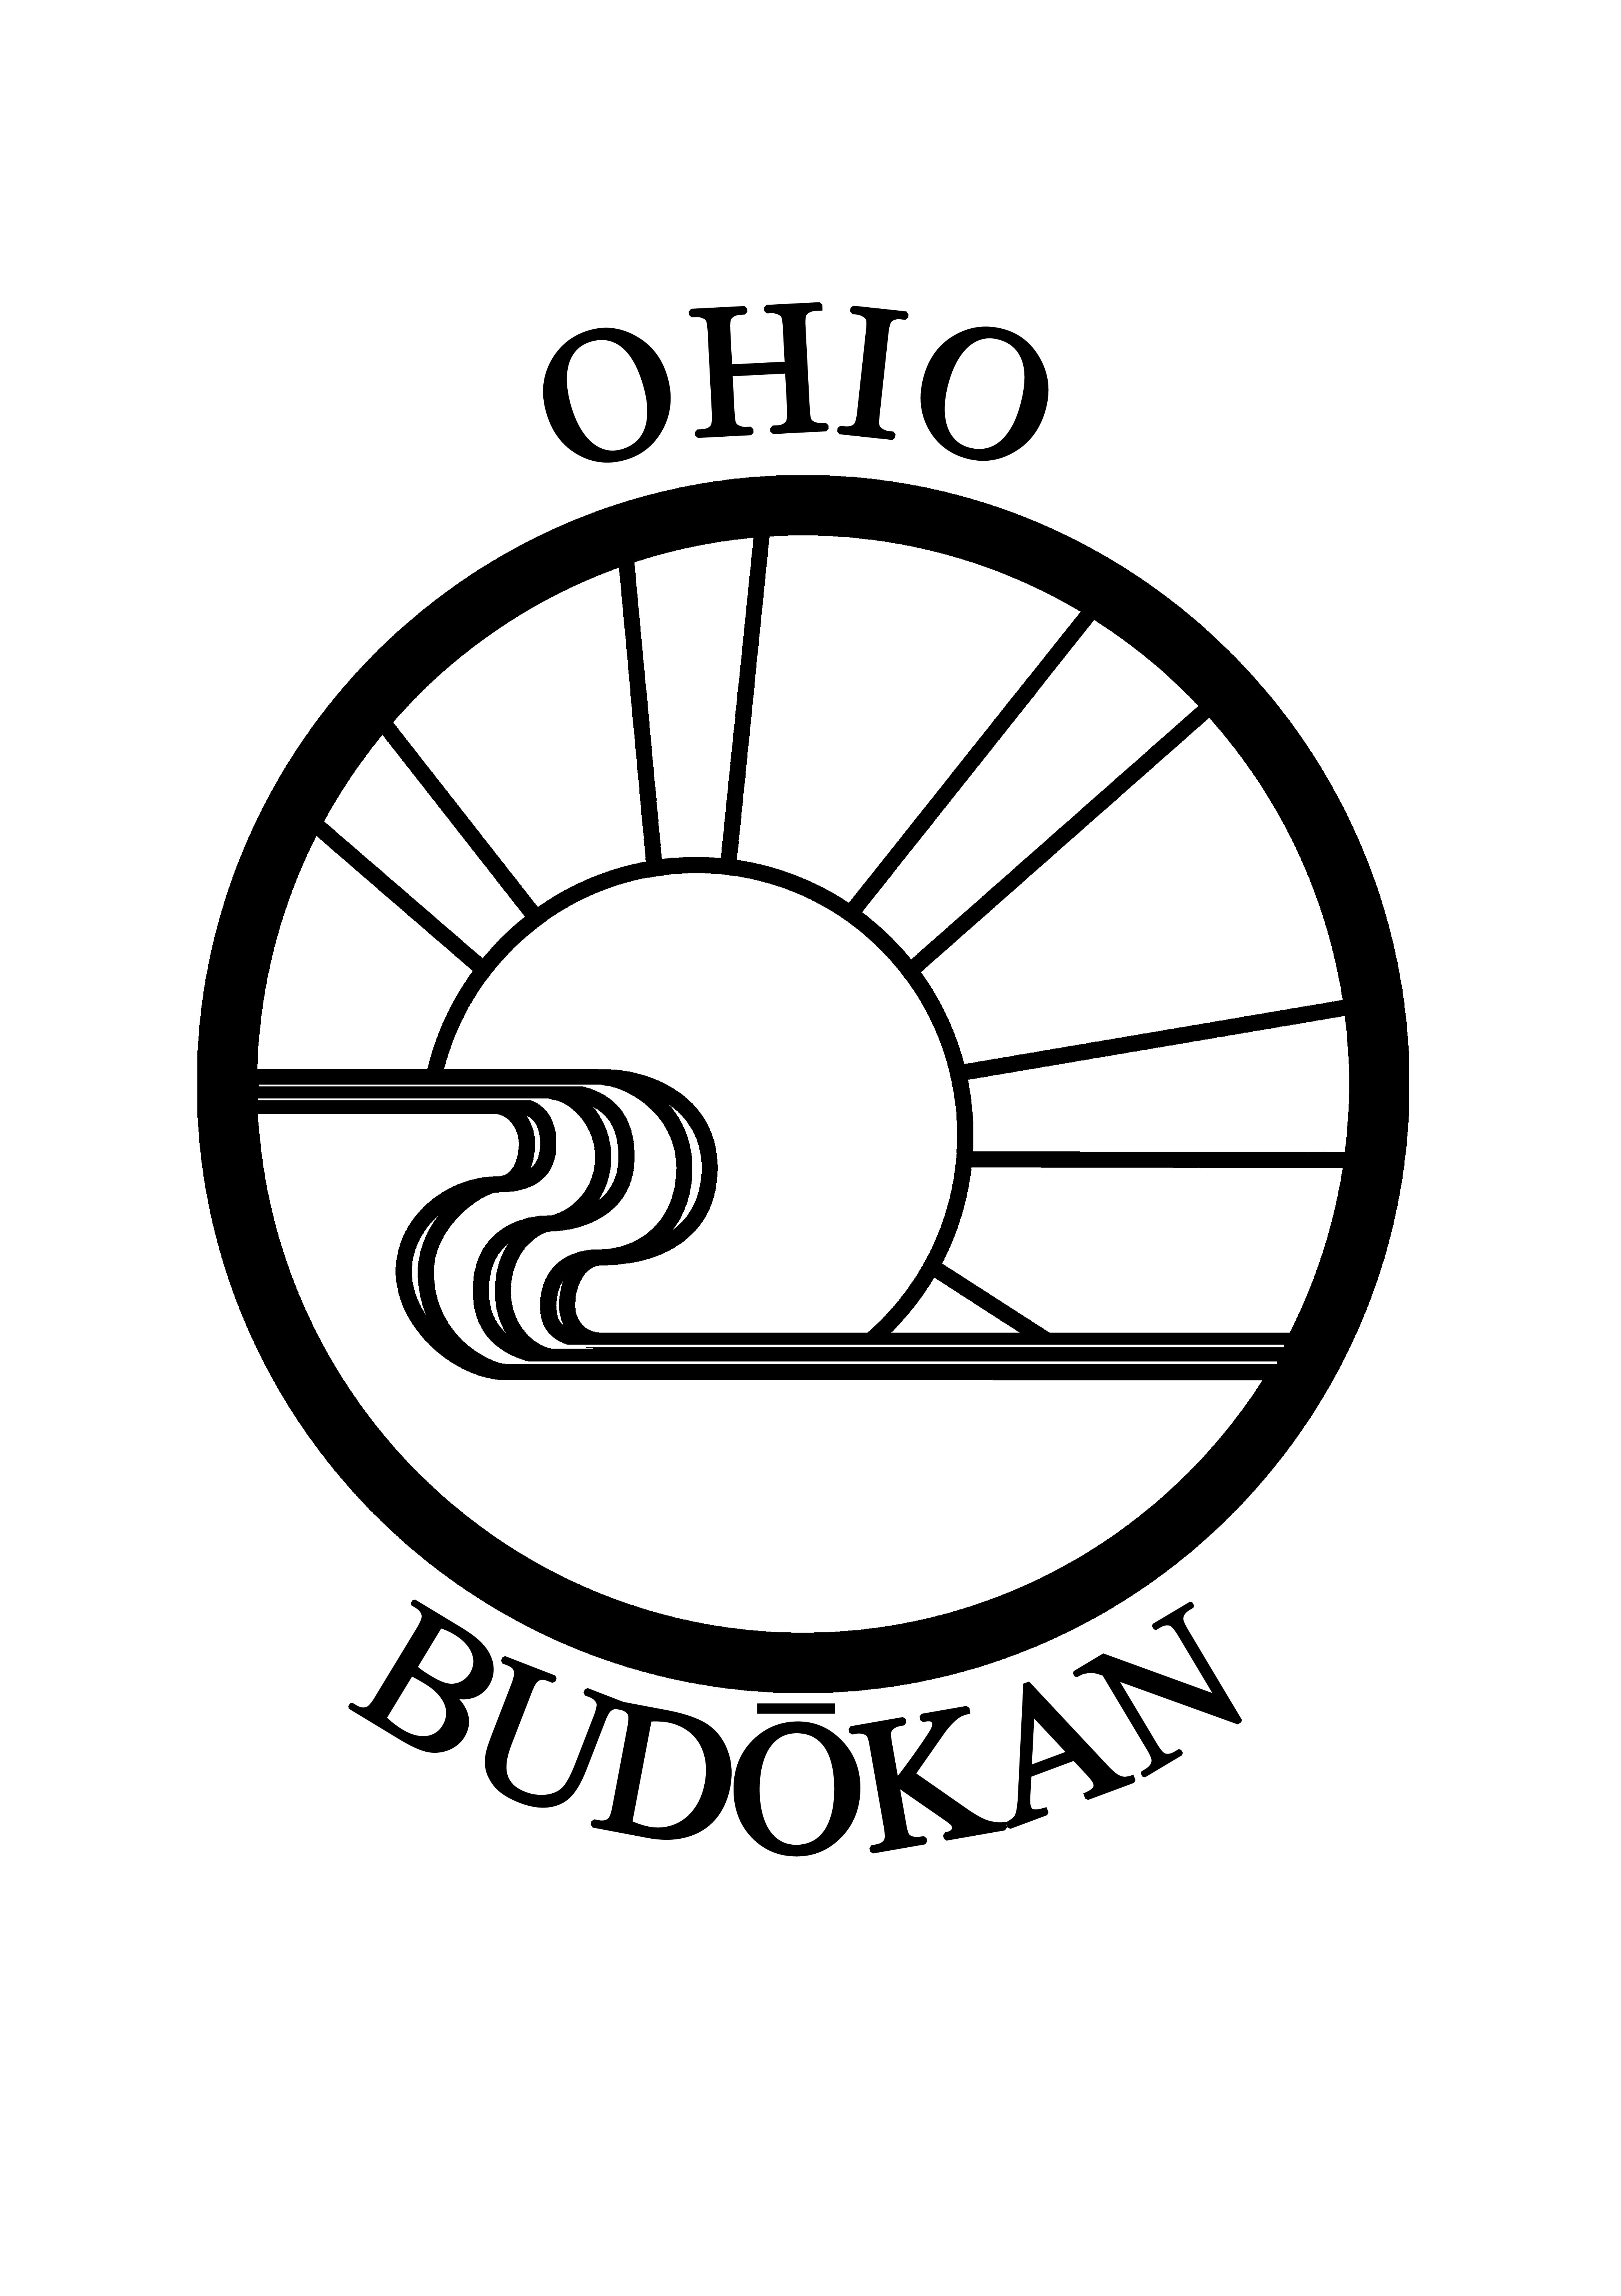 Ohio Budokan logo